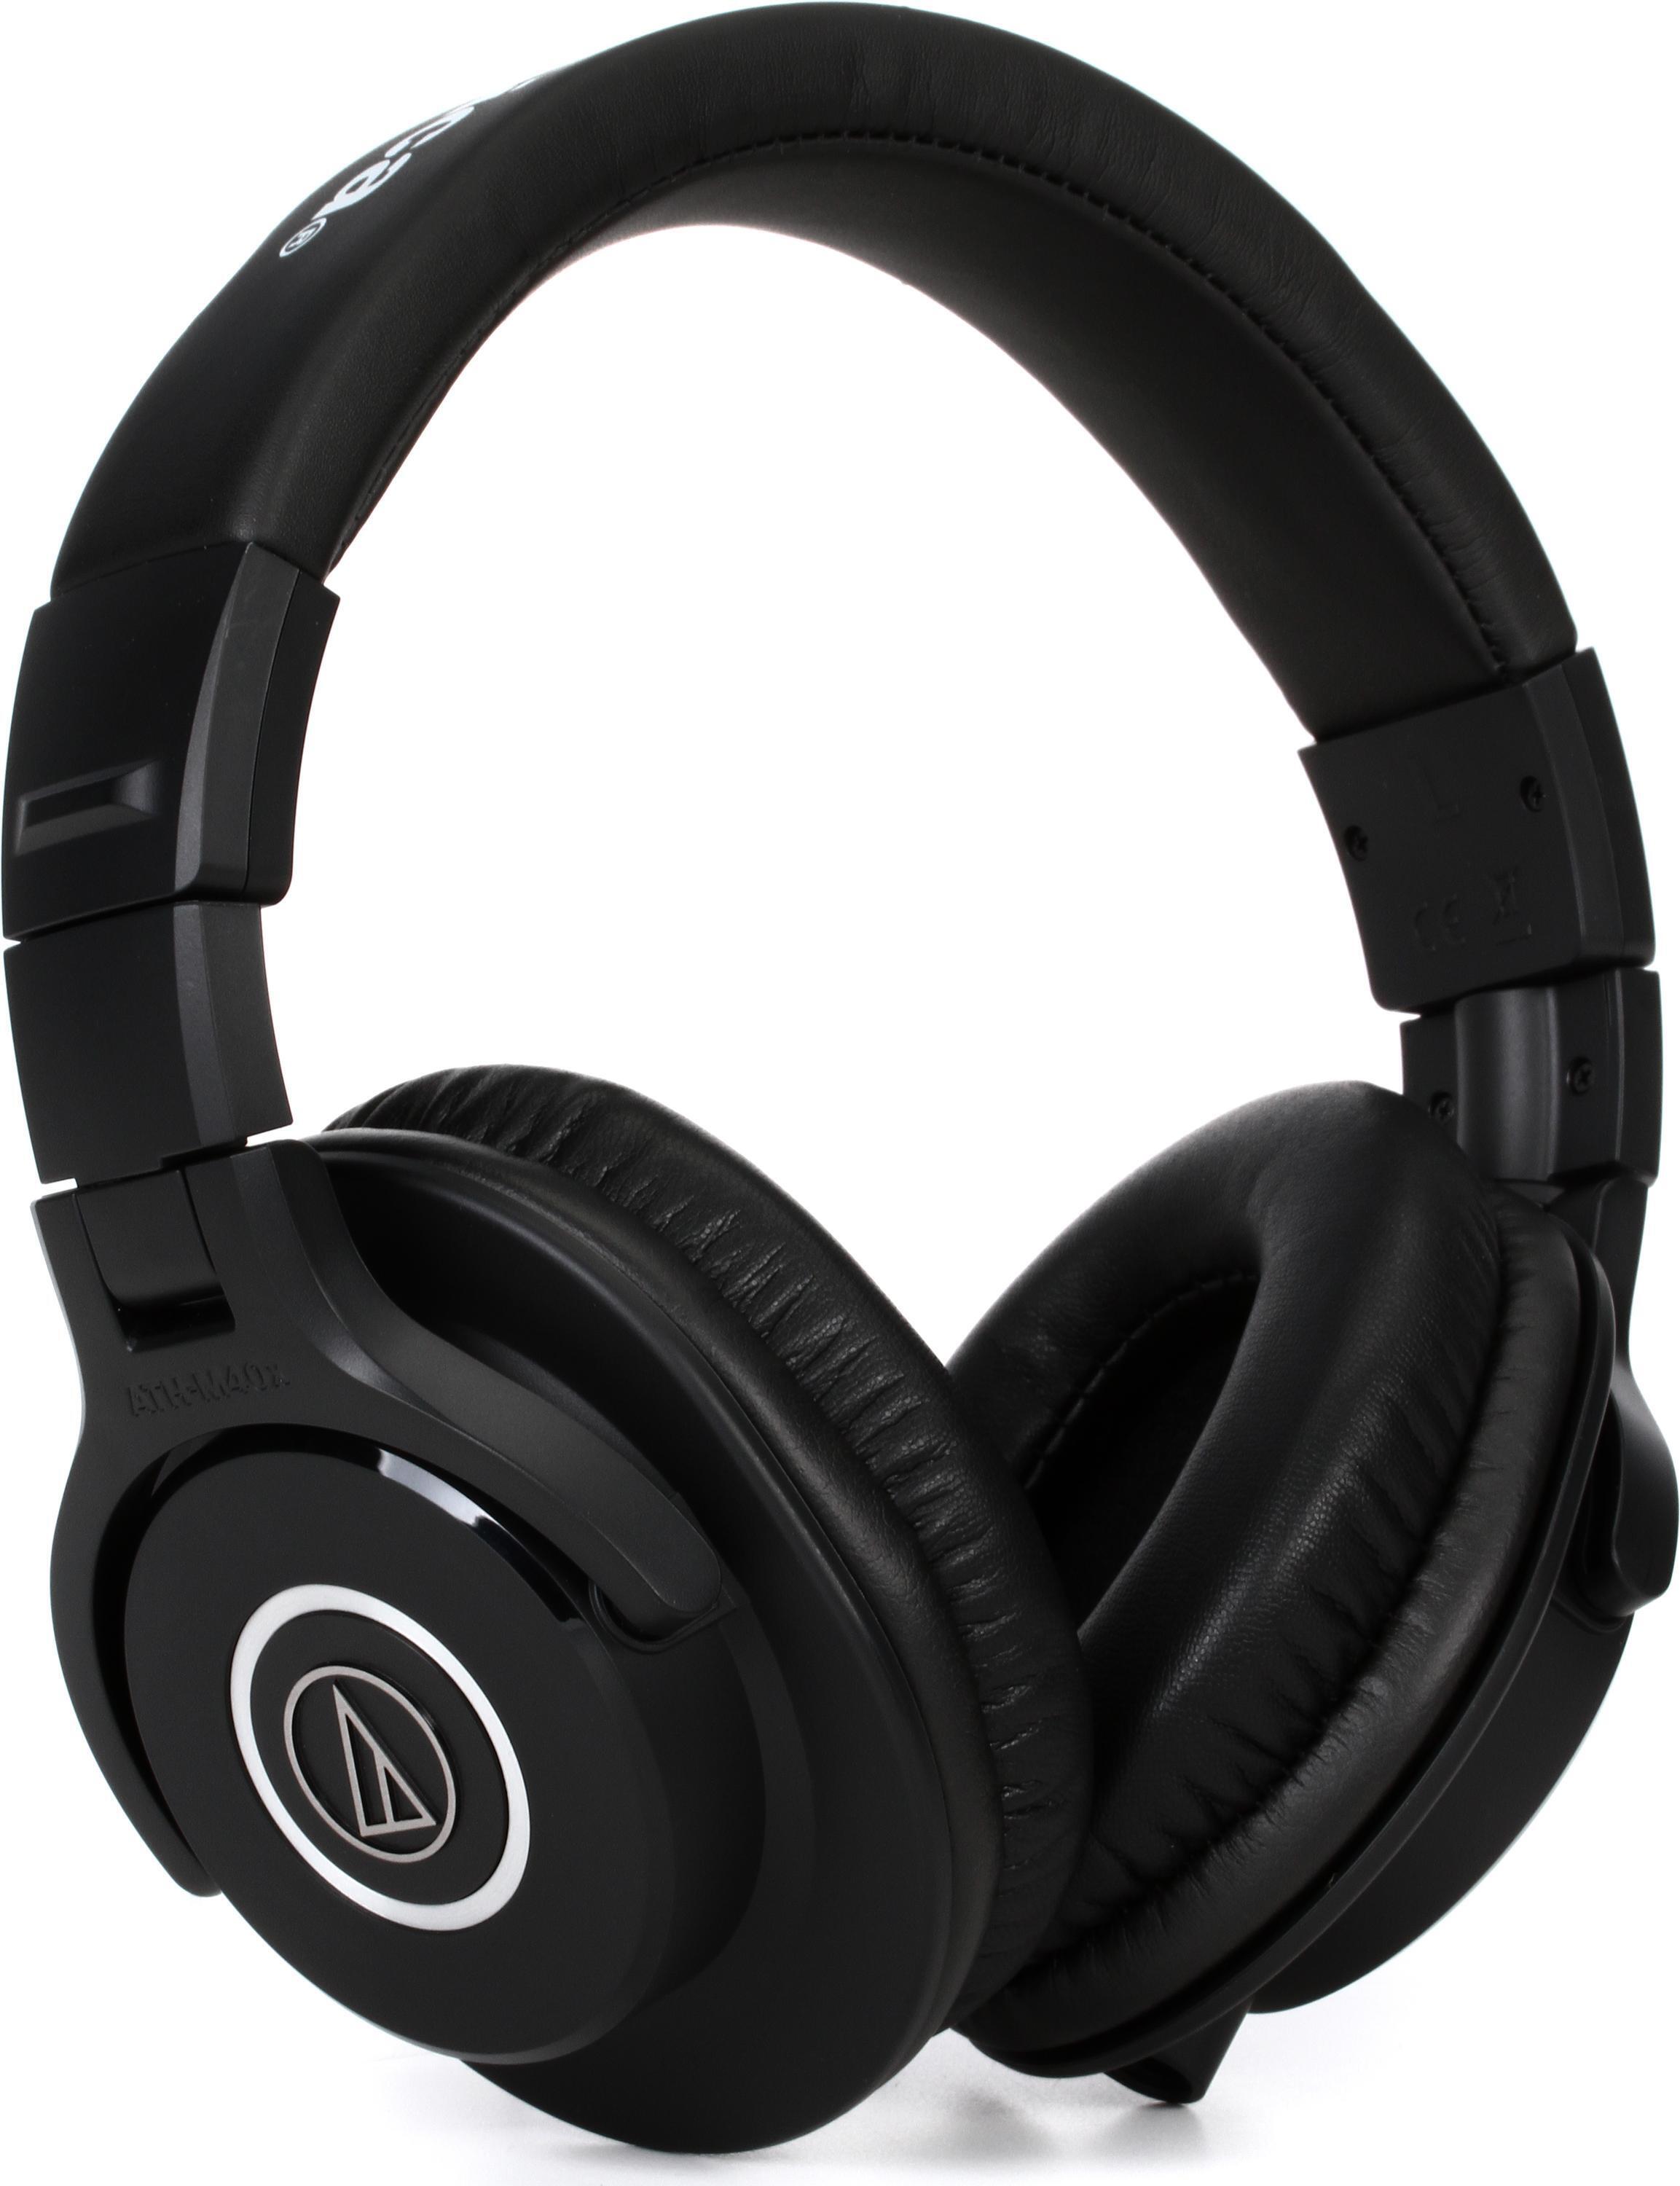 Bundled Item: Audio-Technica ATH-M40x Closed-back Studio Monitoring Headphones